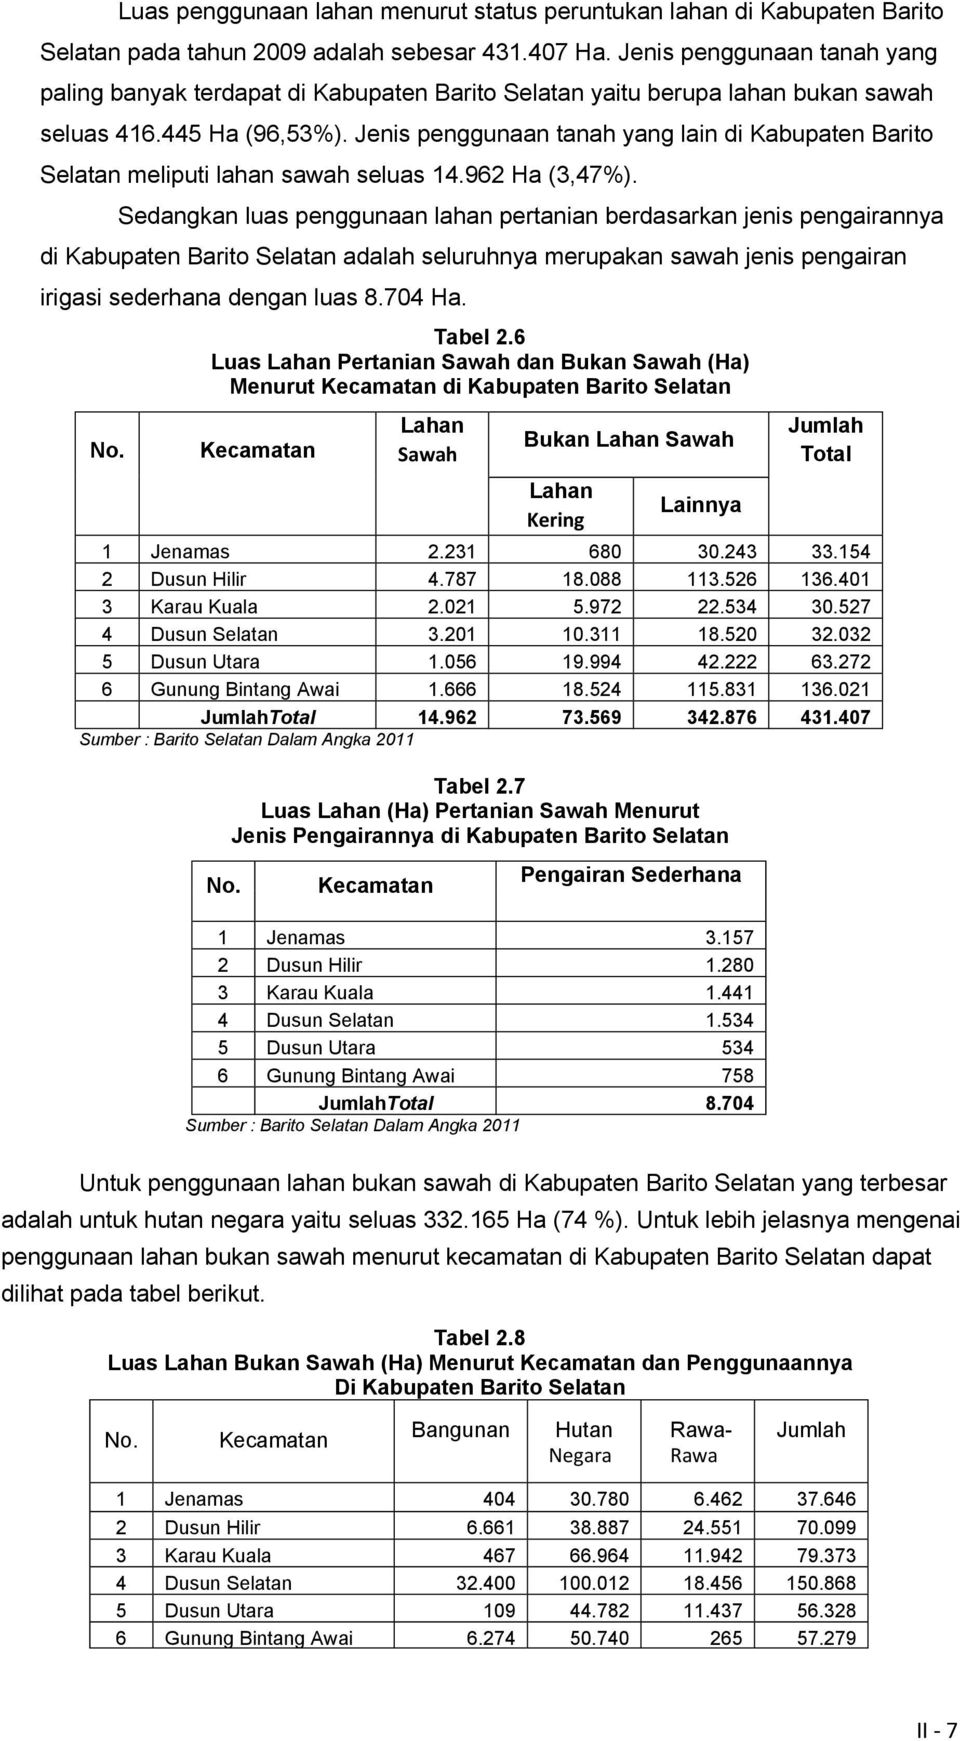 Jenis penggunaan tanah yang lain di Kabupaten Barito Selatan meliputi lahan sawah seluas 14.962 Ha (3,47%).